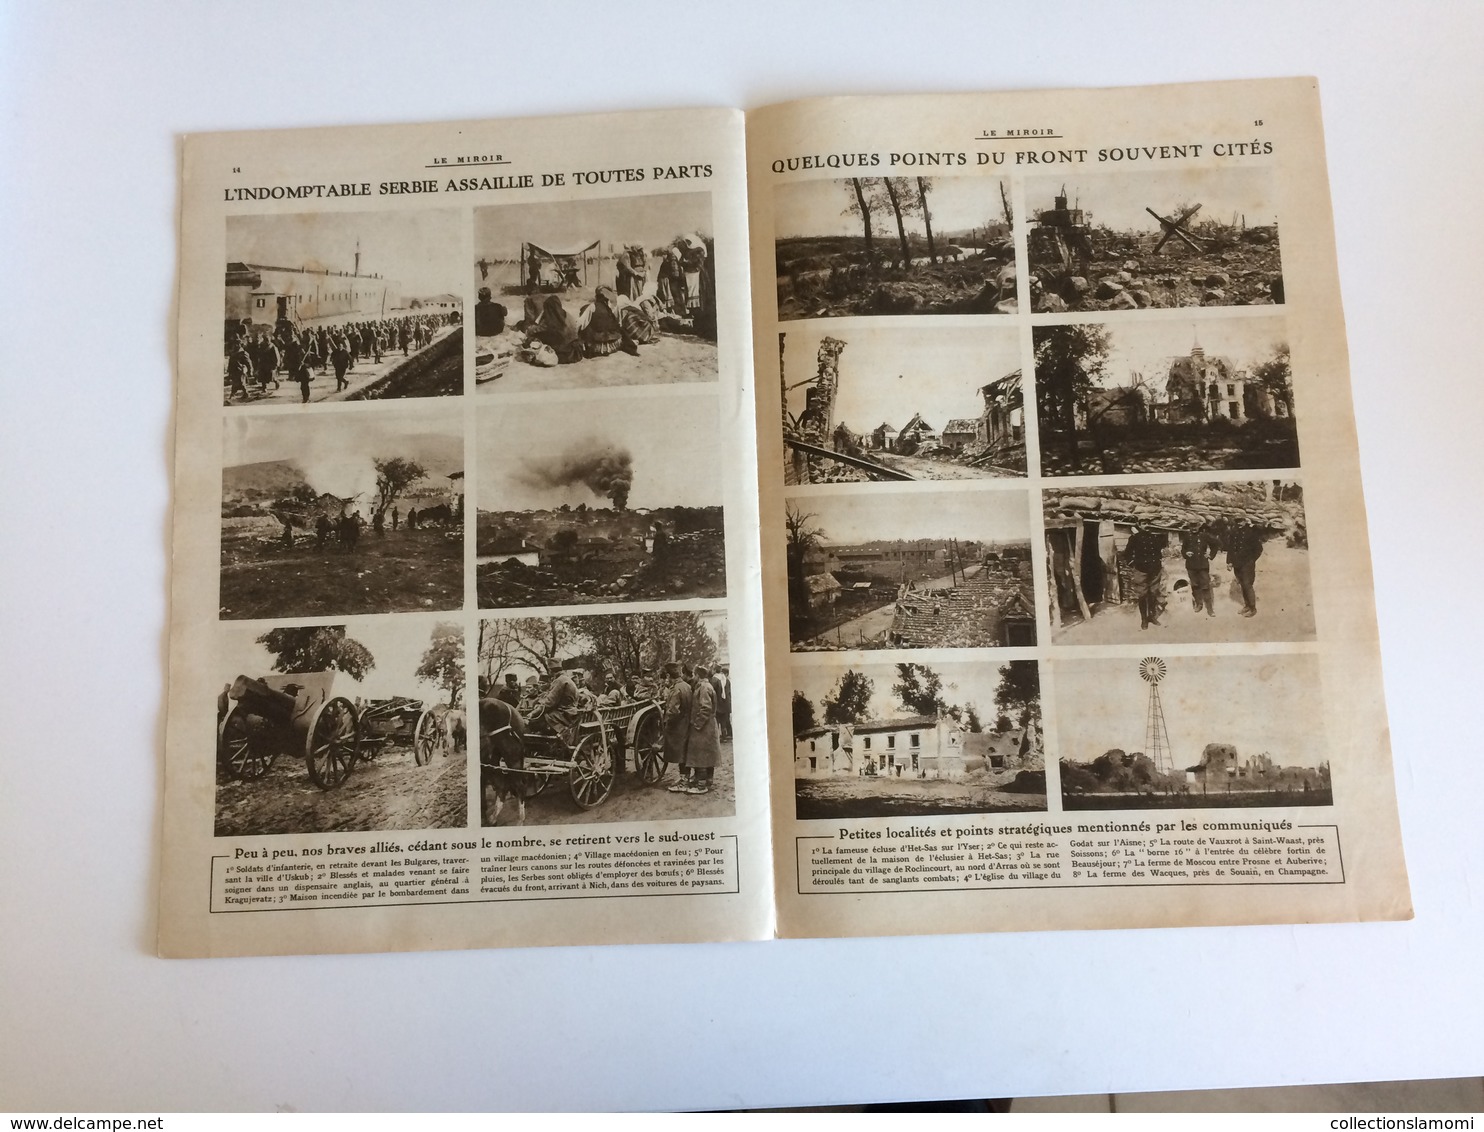 Le Miroir, Guerre 1914-1918 - Hebdomadaire n°102 - 7.11.1915 Le Monde en Guerre (The World at War)